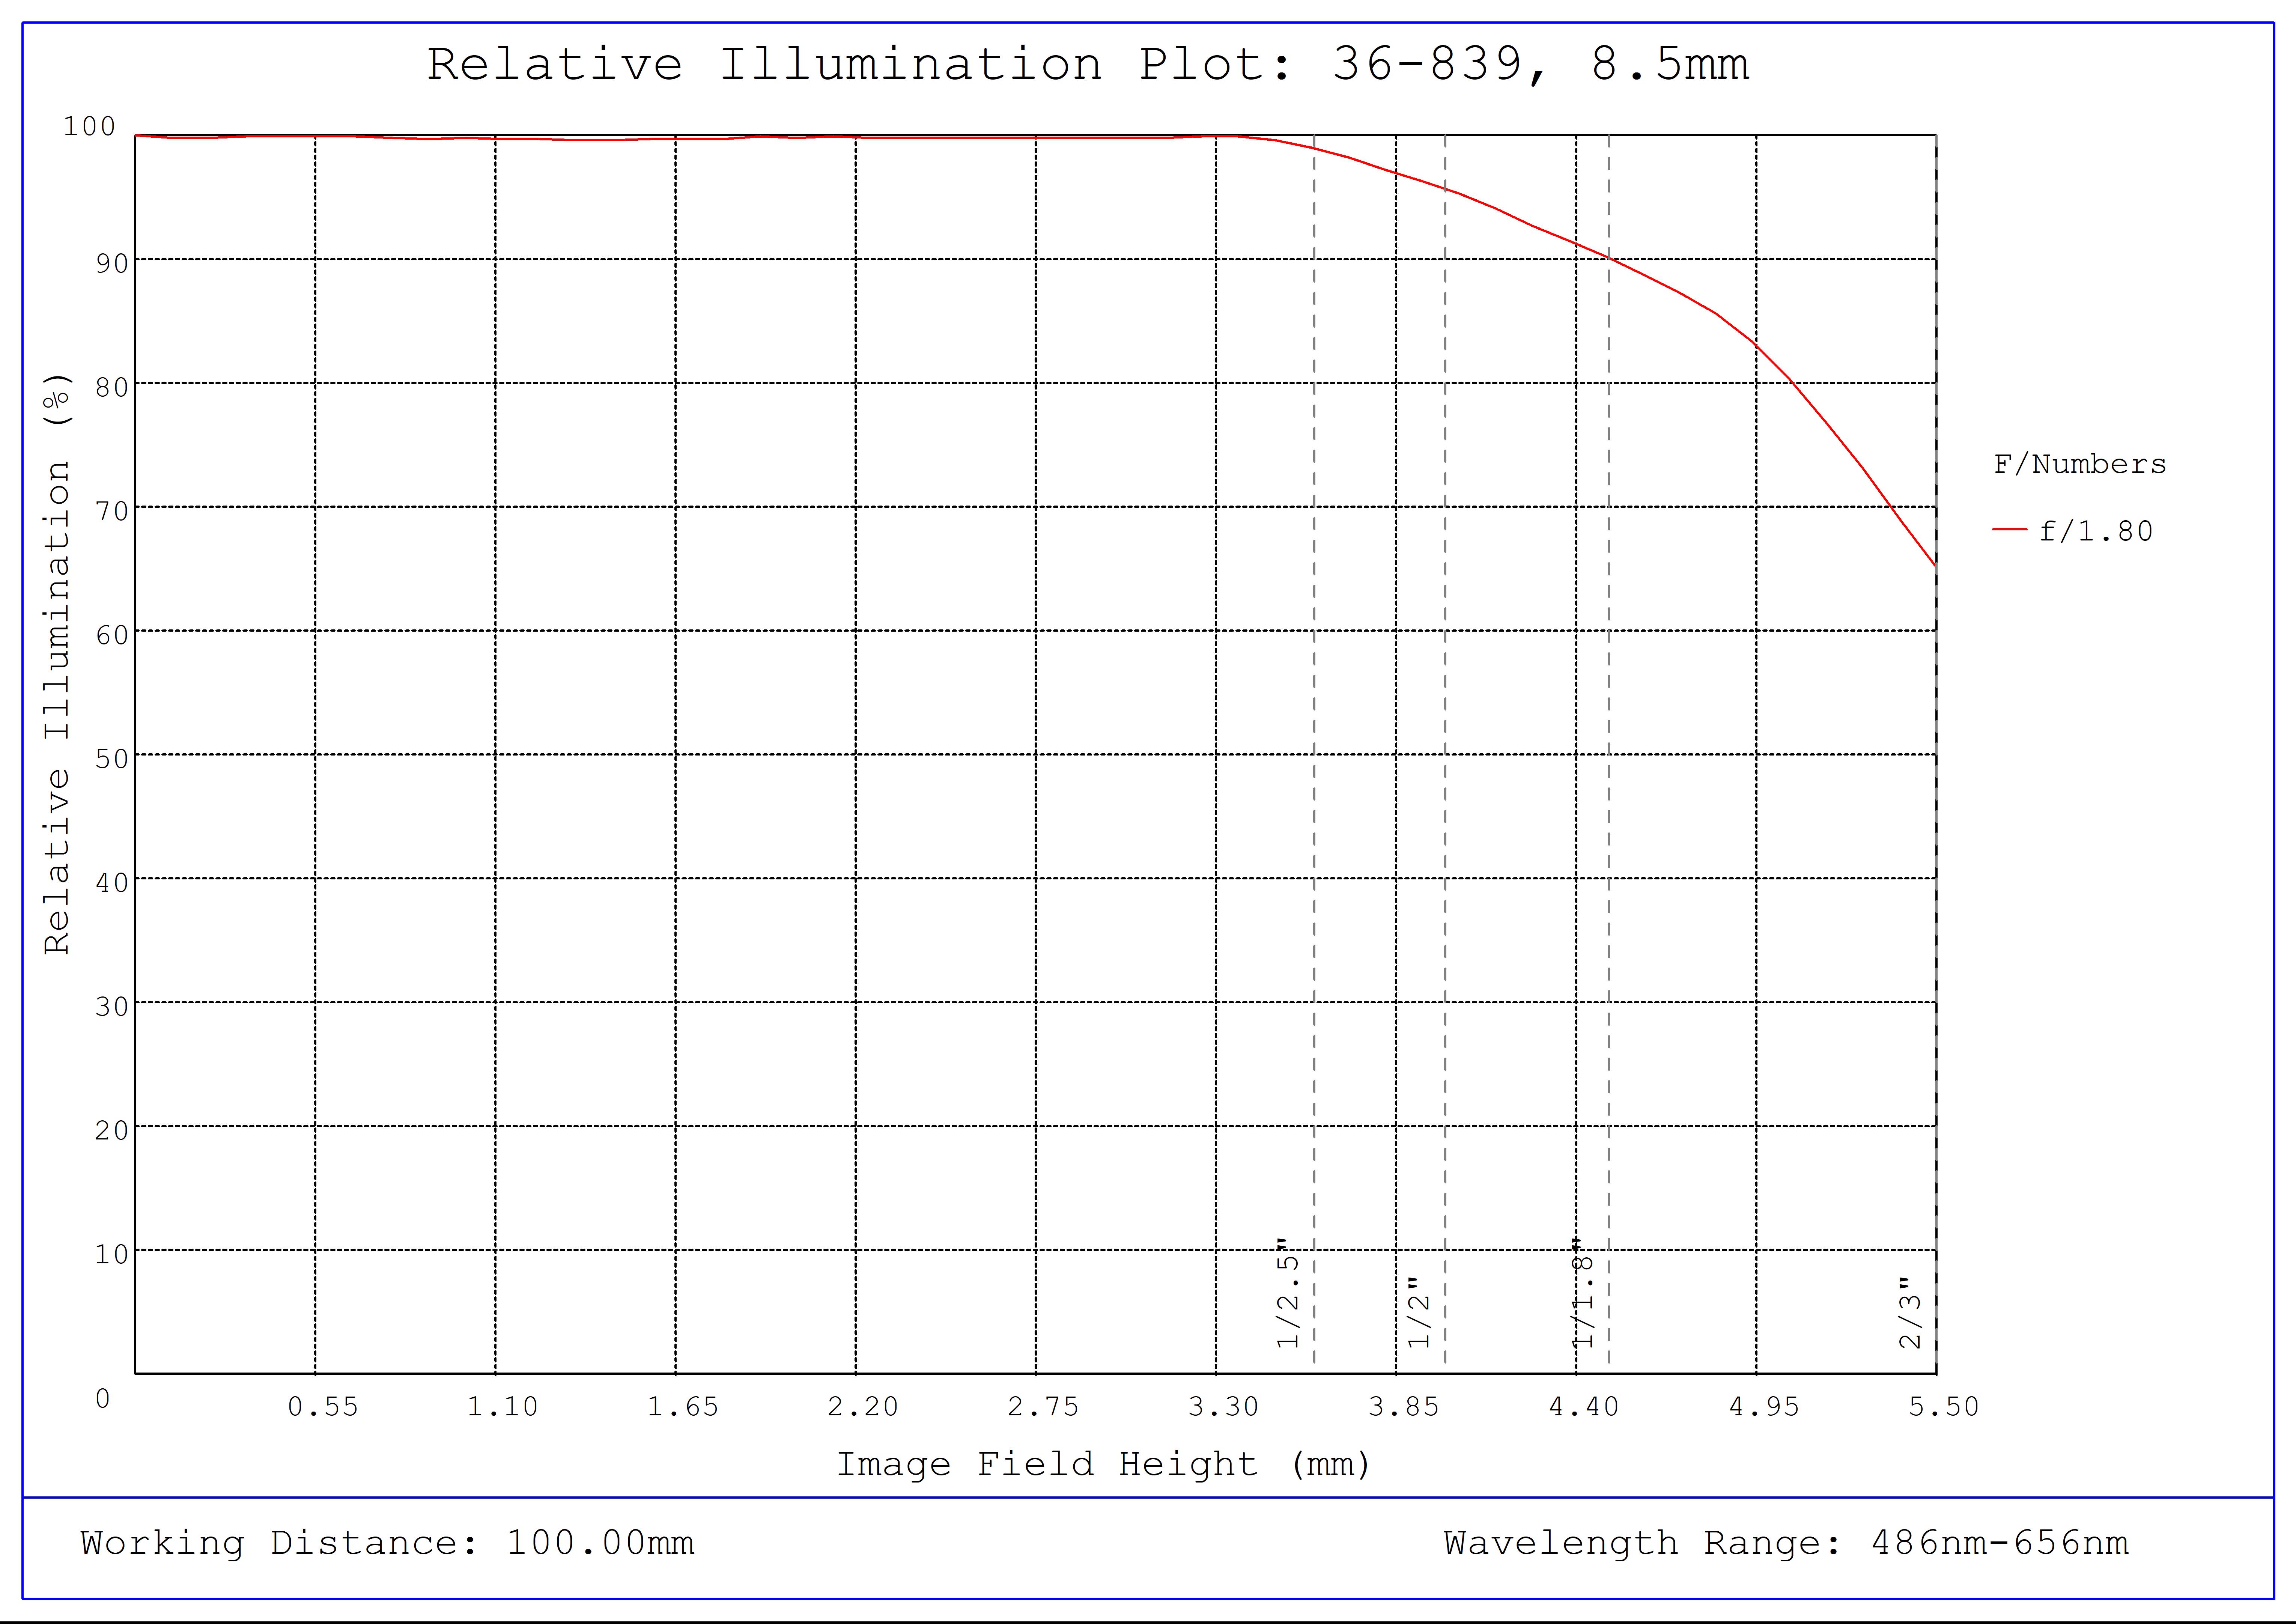 #36-839, 8.5mm, f/1.8 Cr Series Fixed Focal Length Lens, Relative Illumination Plot